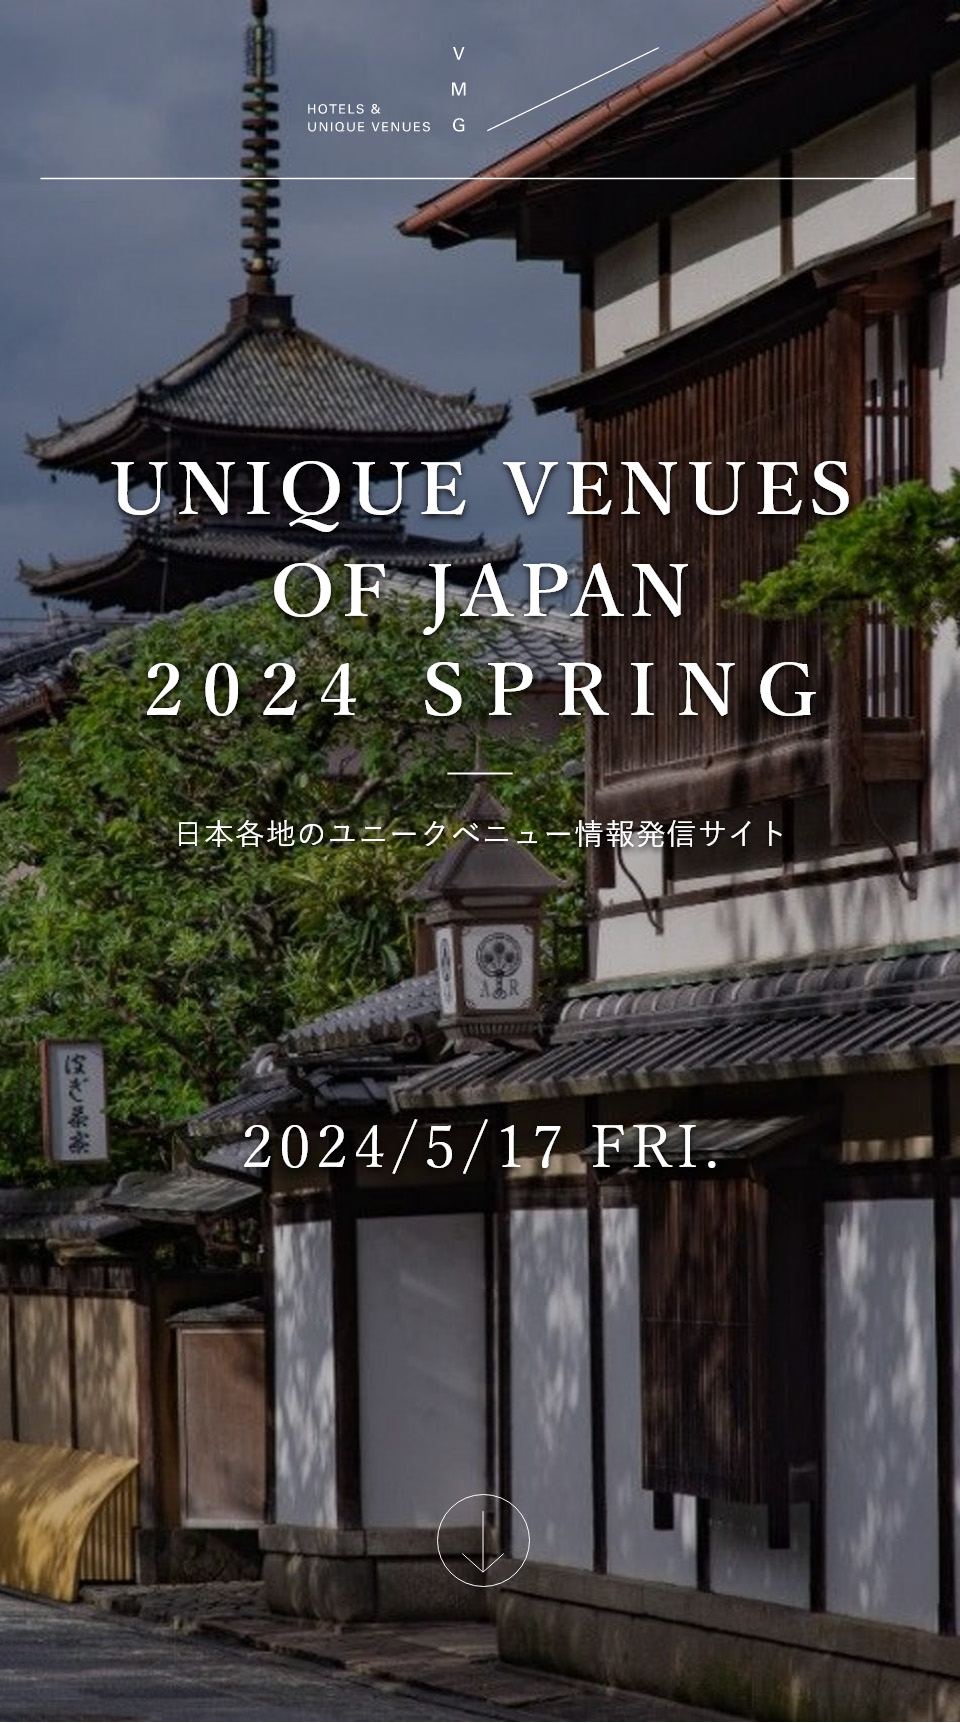 UNIQUE VENUES OF JAPAN 2023 のご案内｜【公式】VMG HOTELS & UNIQUE VENUES